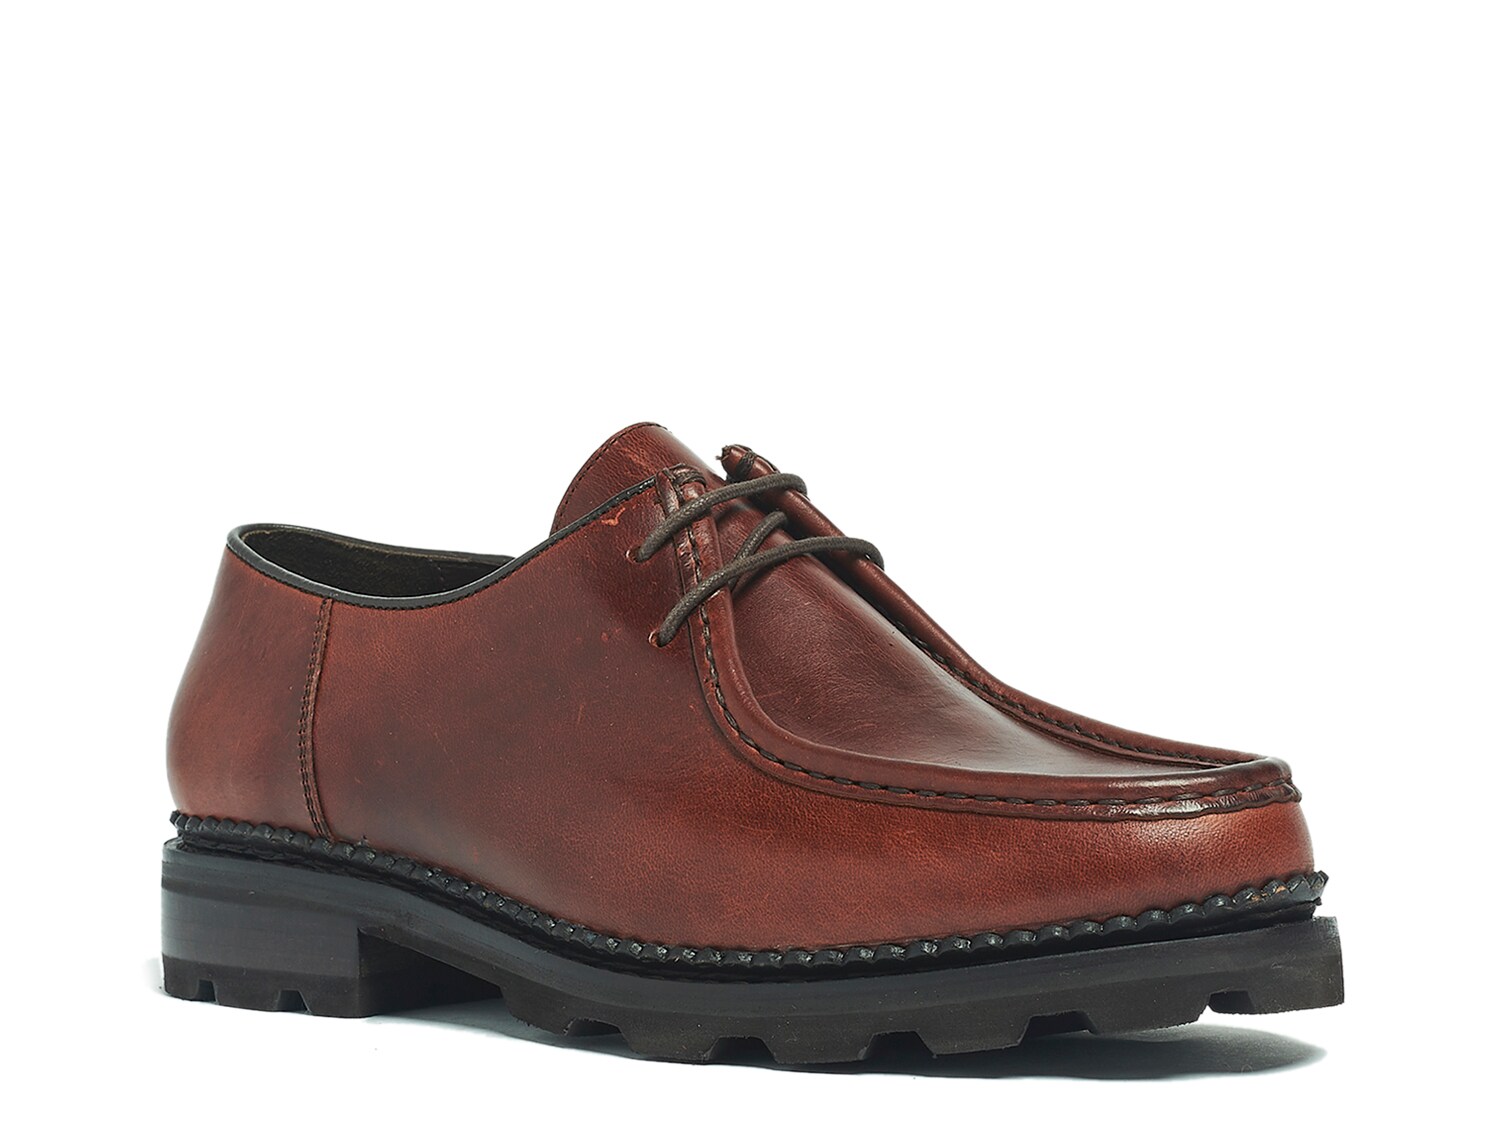 Ботинки Anthony Veer Wright, красный мужские замшевые ботинки чукка на шнуровке george anthony veer